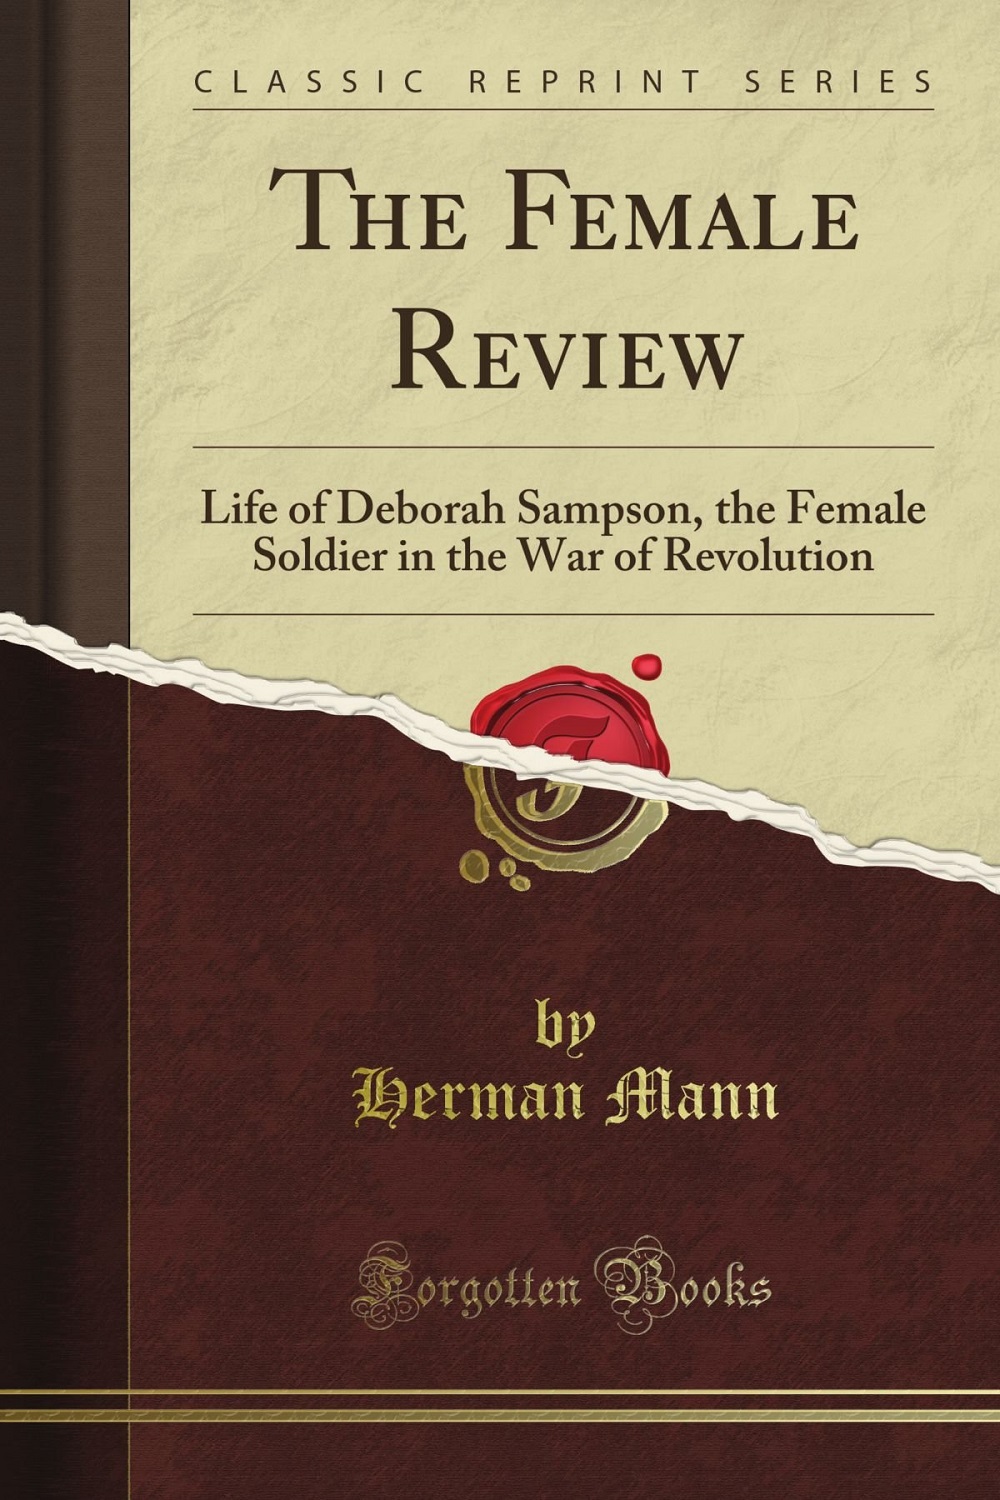 Biography of Deborah Sampson